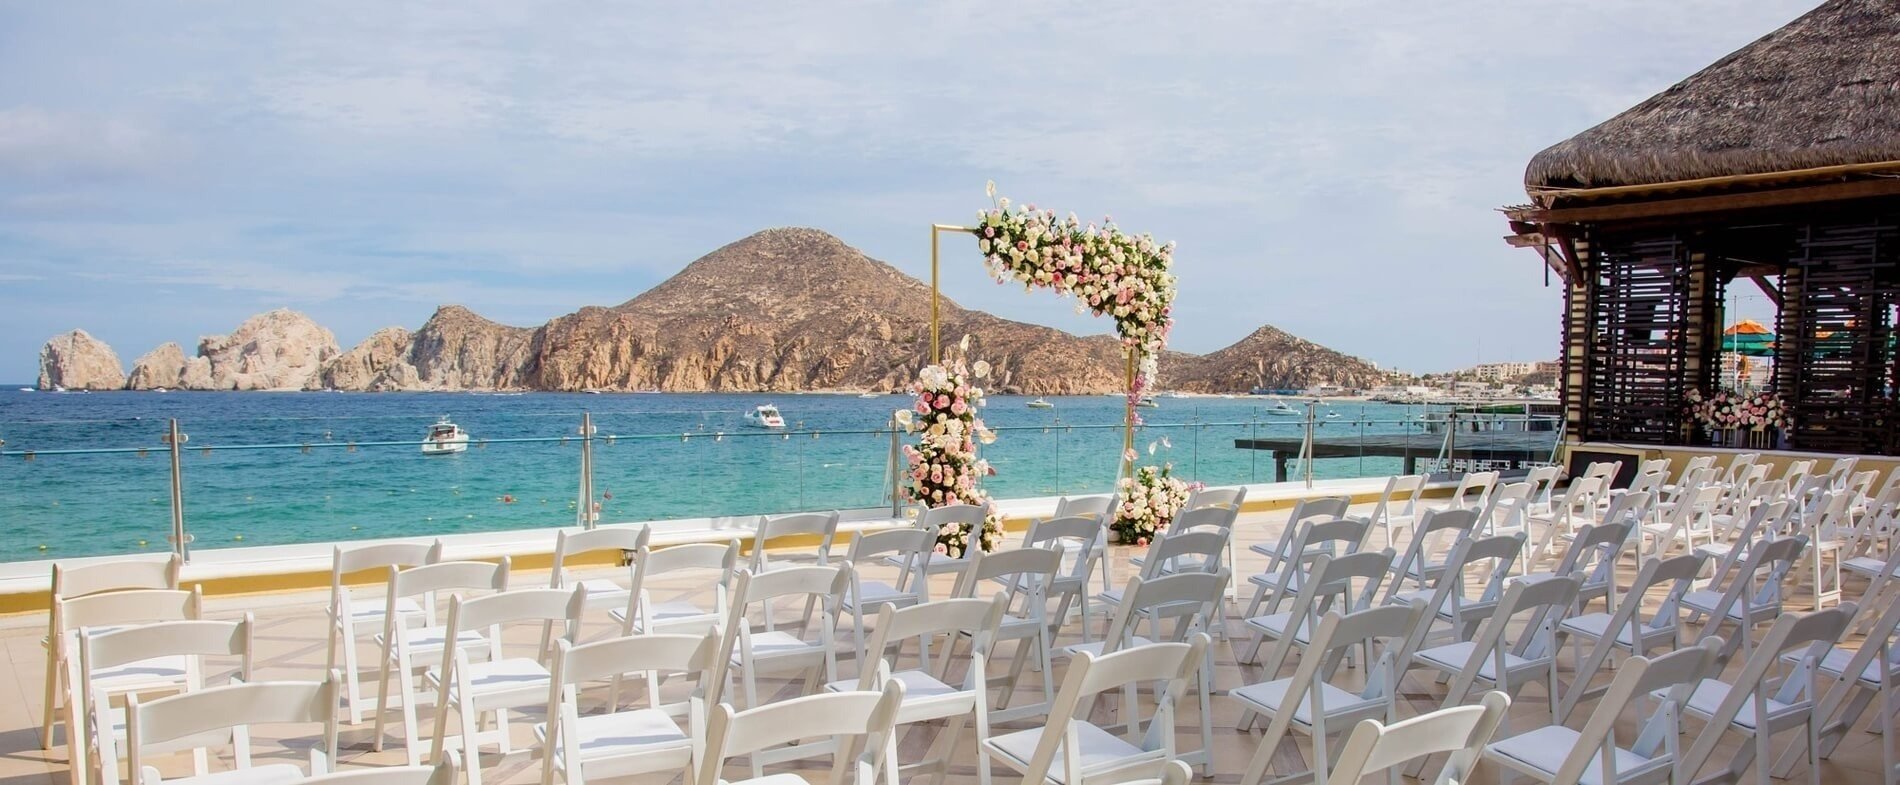 Celebrate your wedding in Los Cabos